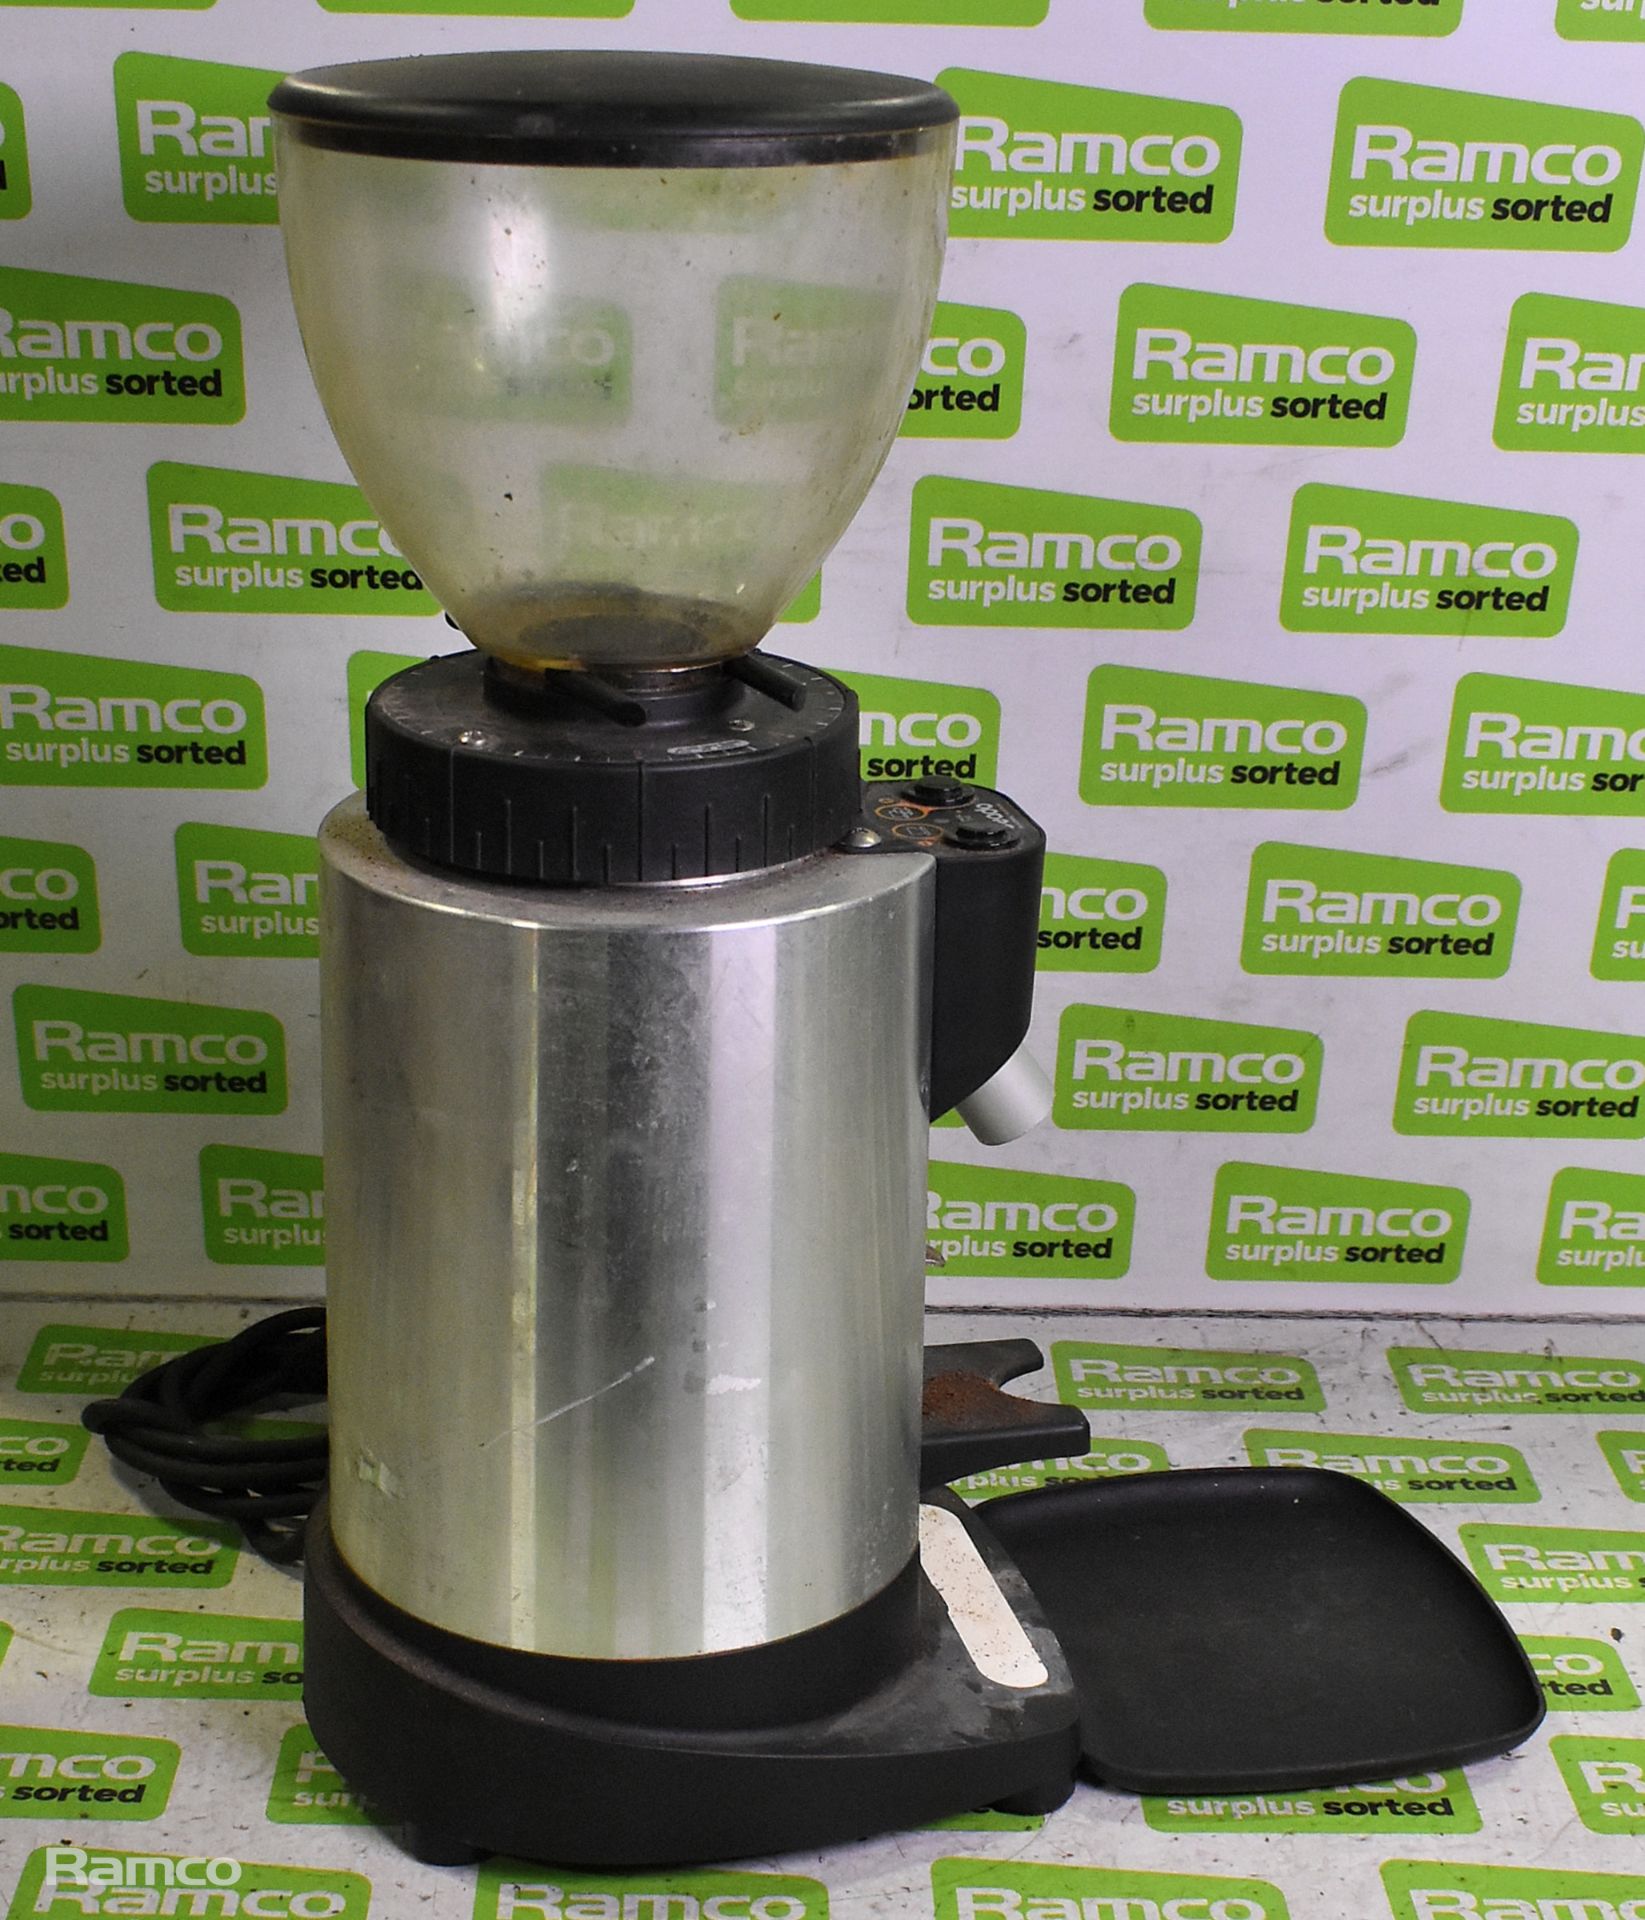 2x Ceado E6P espresso coffee grinders - Image 5 of 6